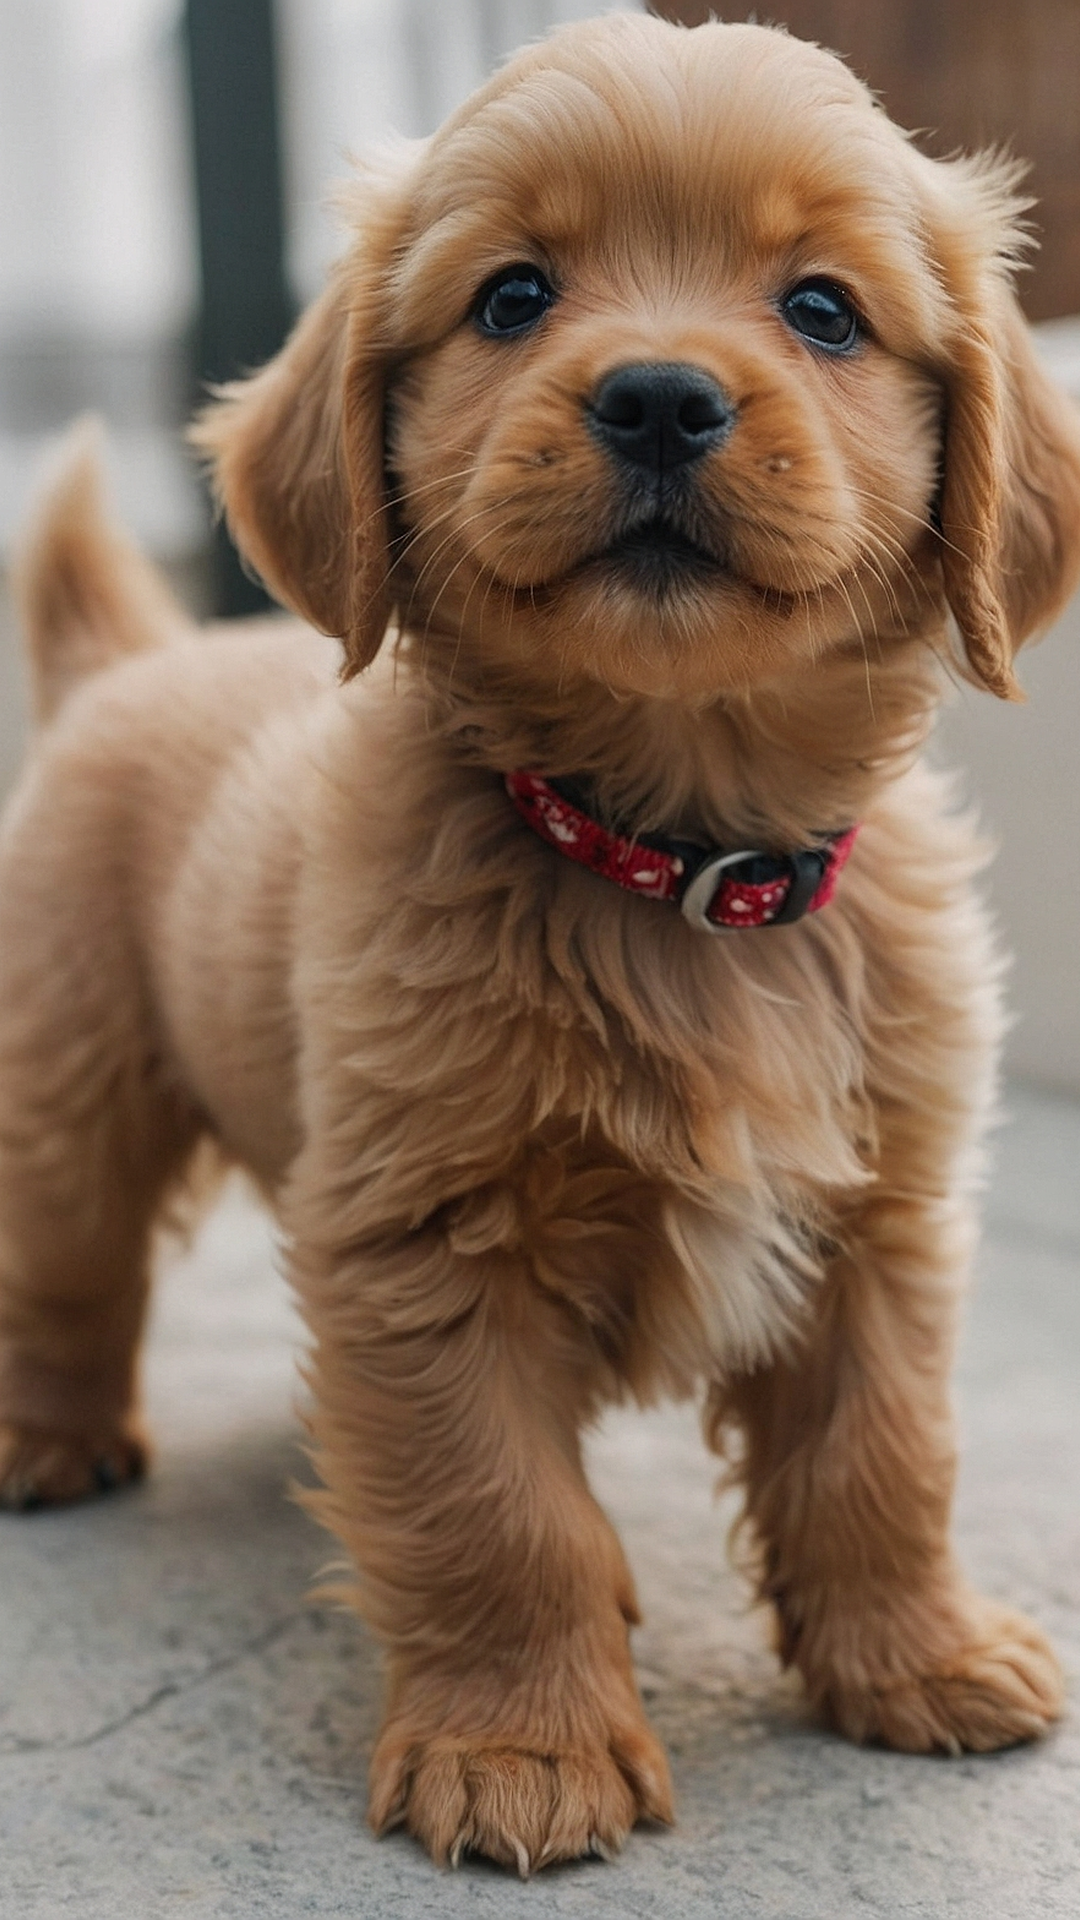 Teacup Boston Terrier: Tiny Paws, Big Personality